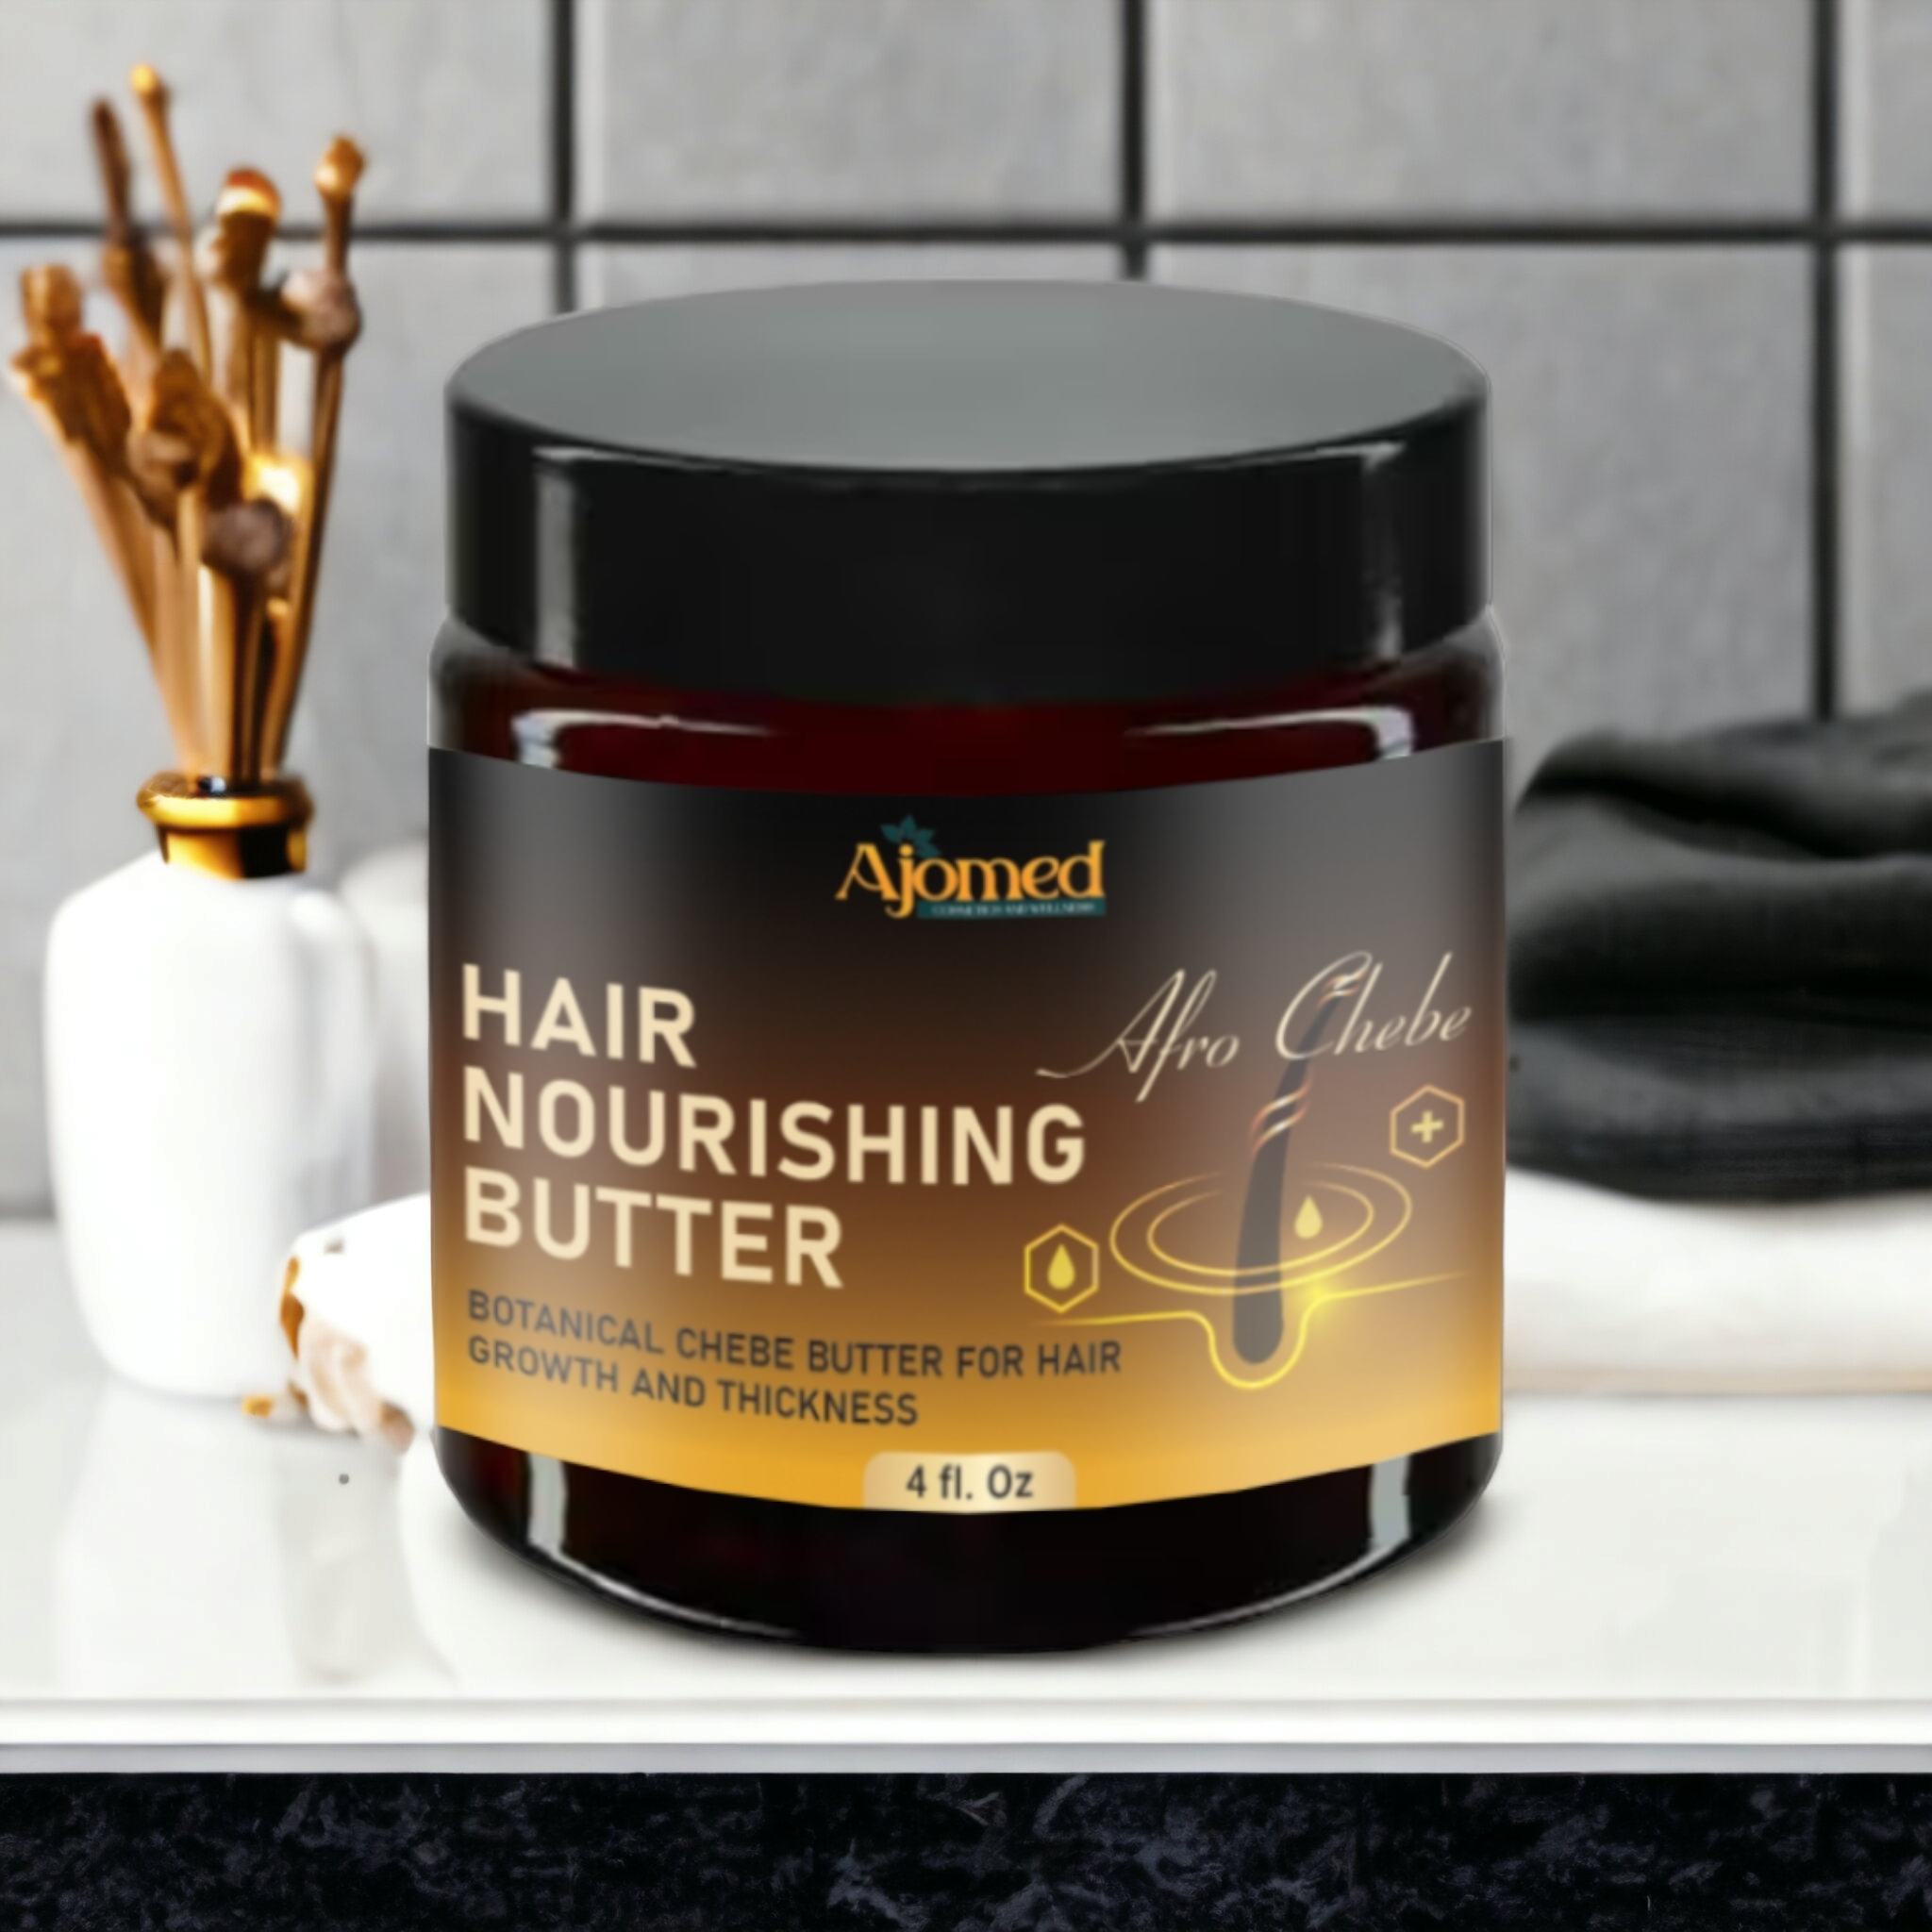 Afro-chebe-Hair-Nourishing-Butter-4 Fl. Oz